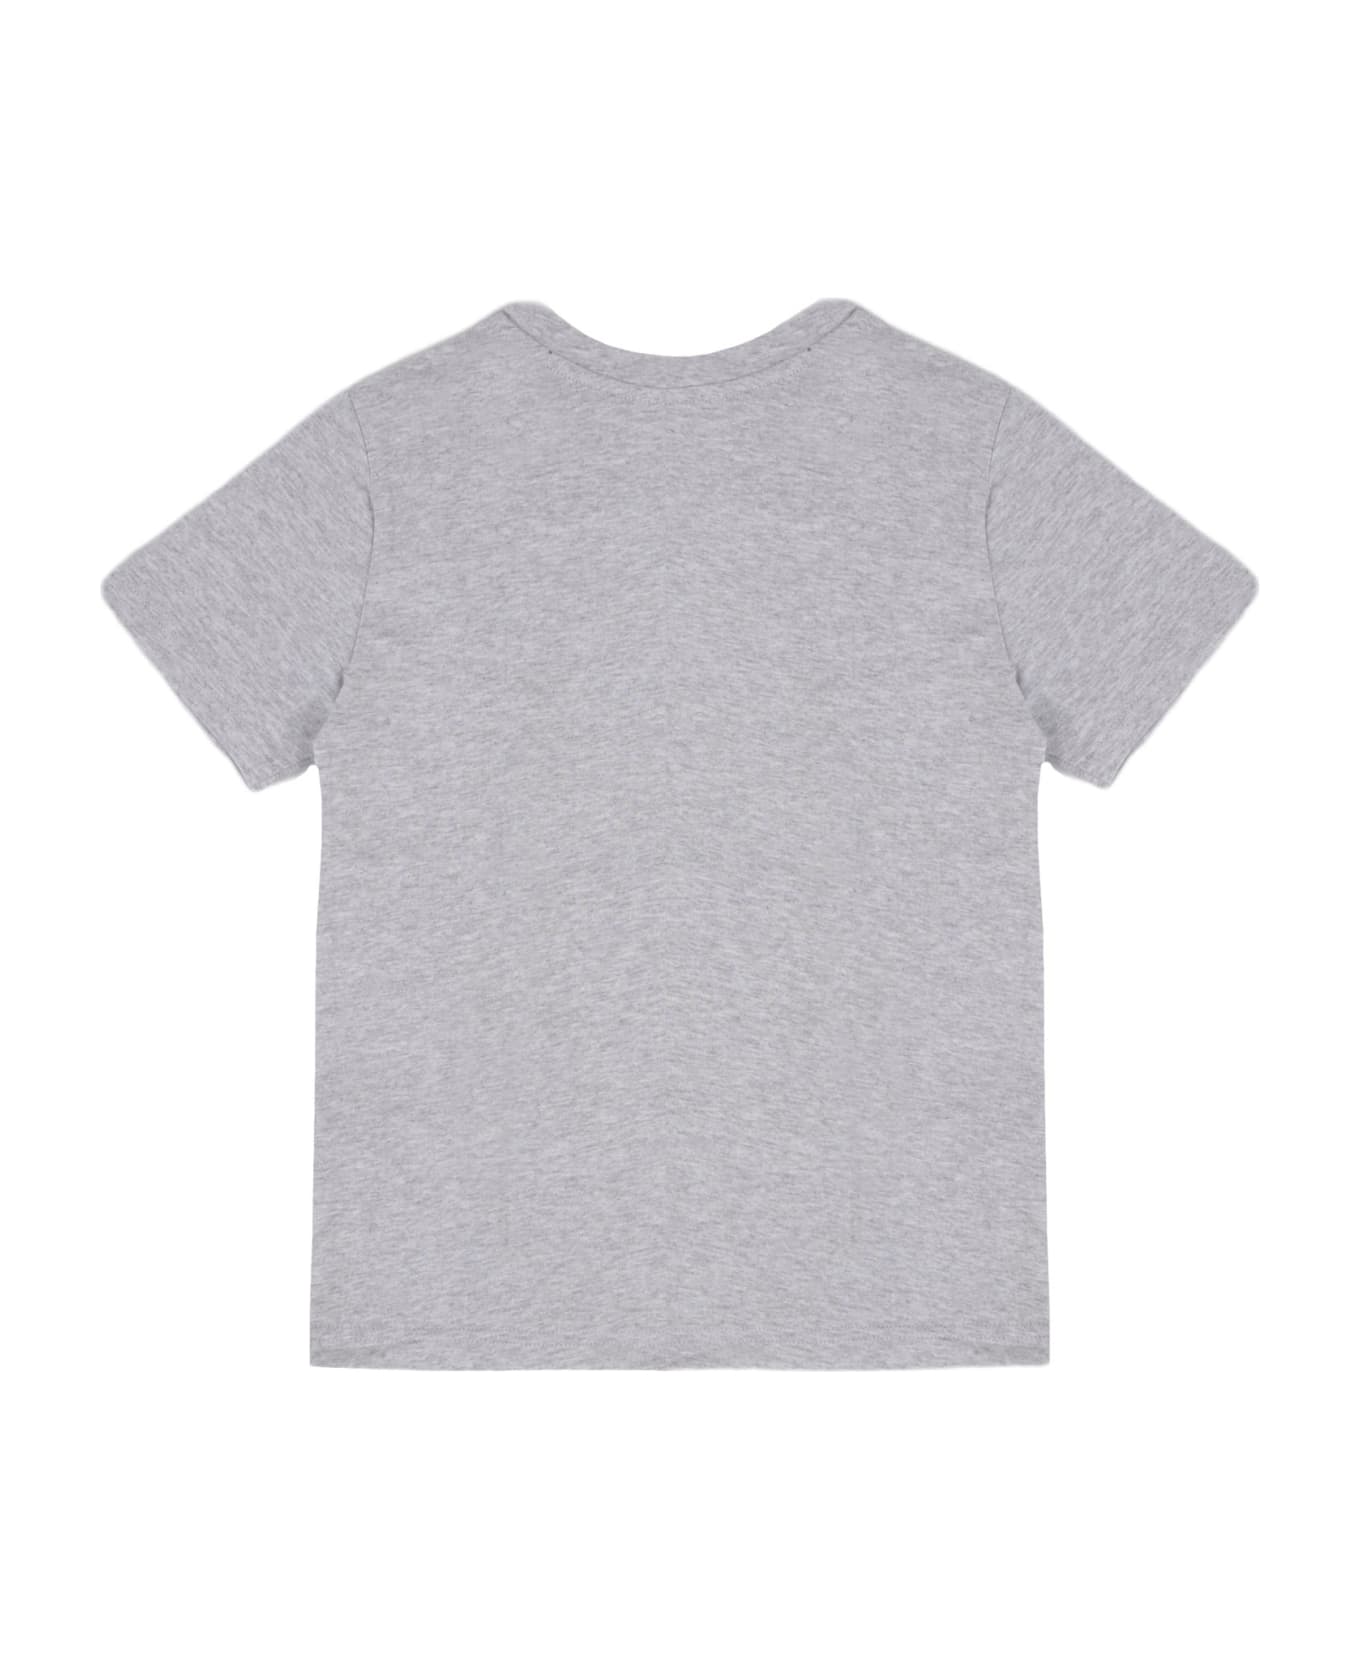 Balmain Cotton T-shirt - Grey